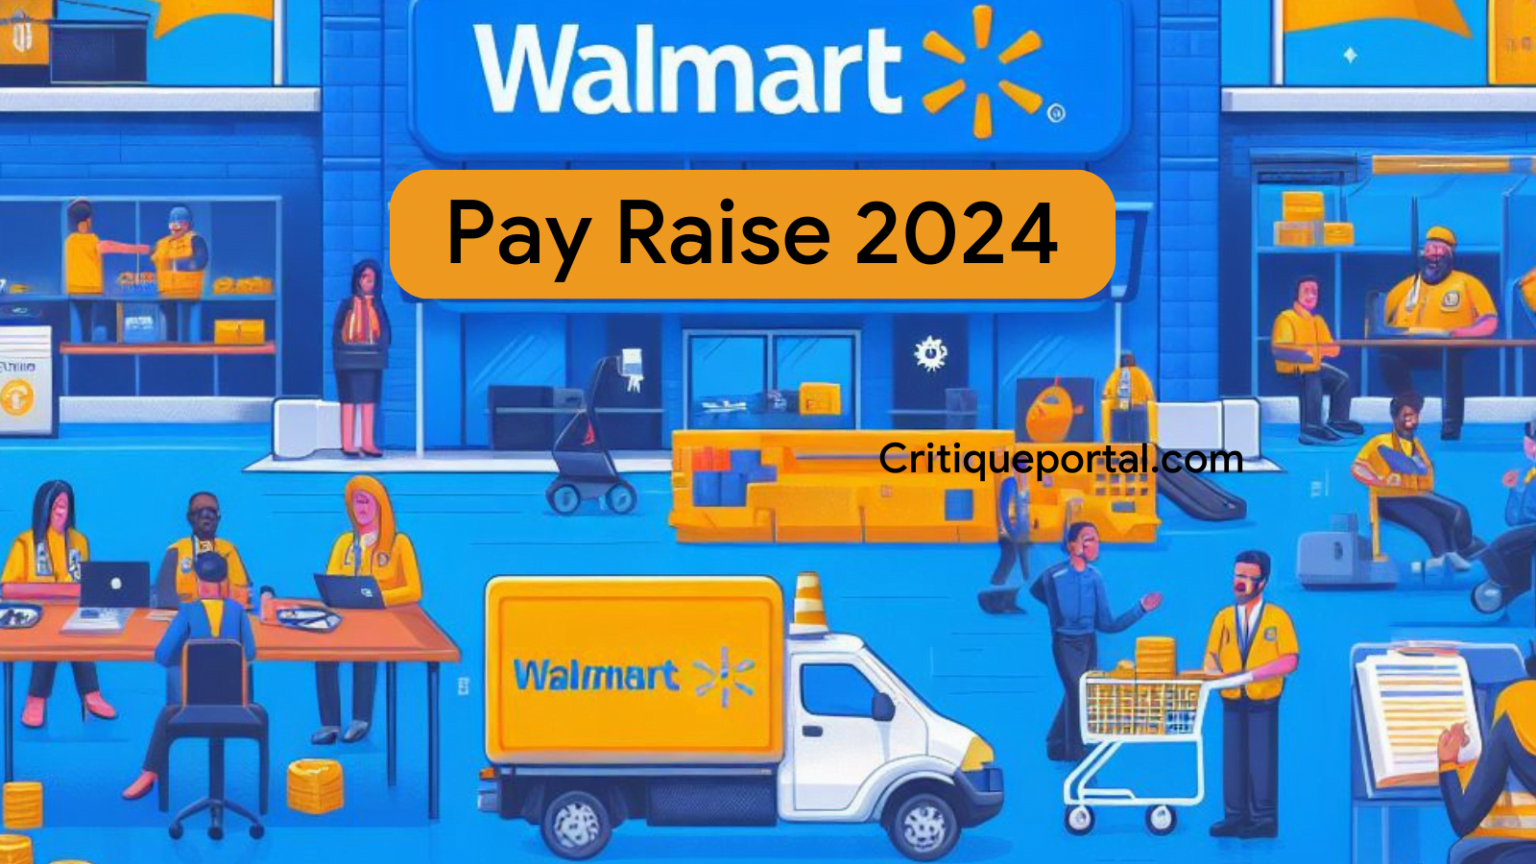 Walmart Pay Raise 2024 Exclusive update CritiquePortal